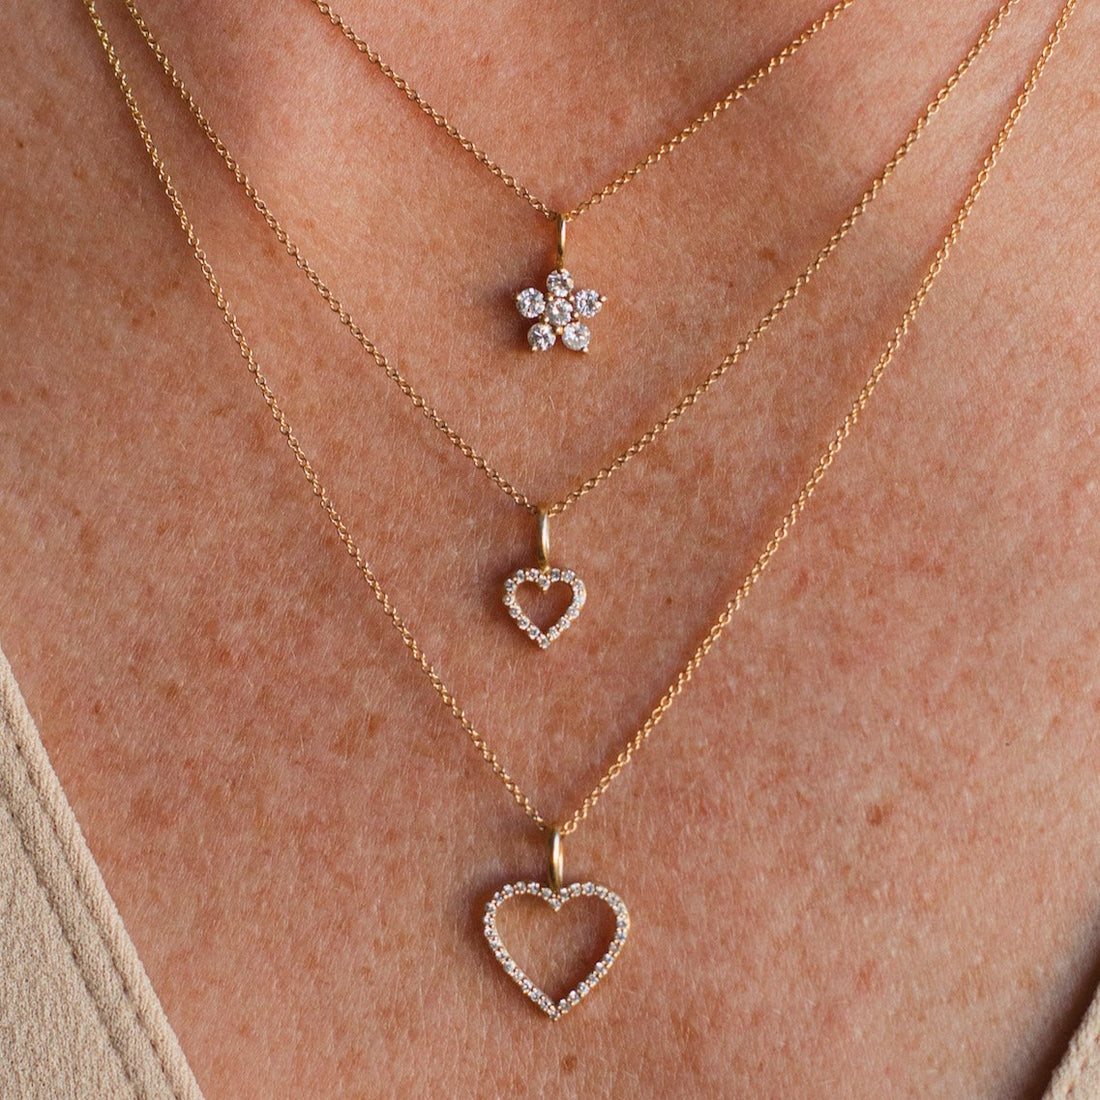 Amy Diamond Flower Necklace, 18K White Gold